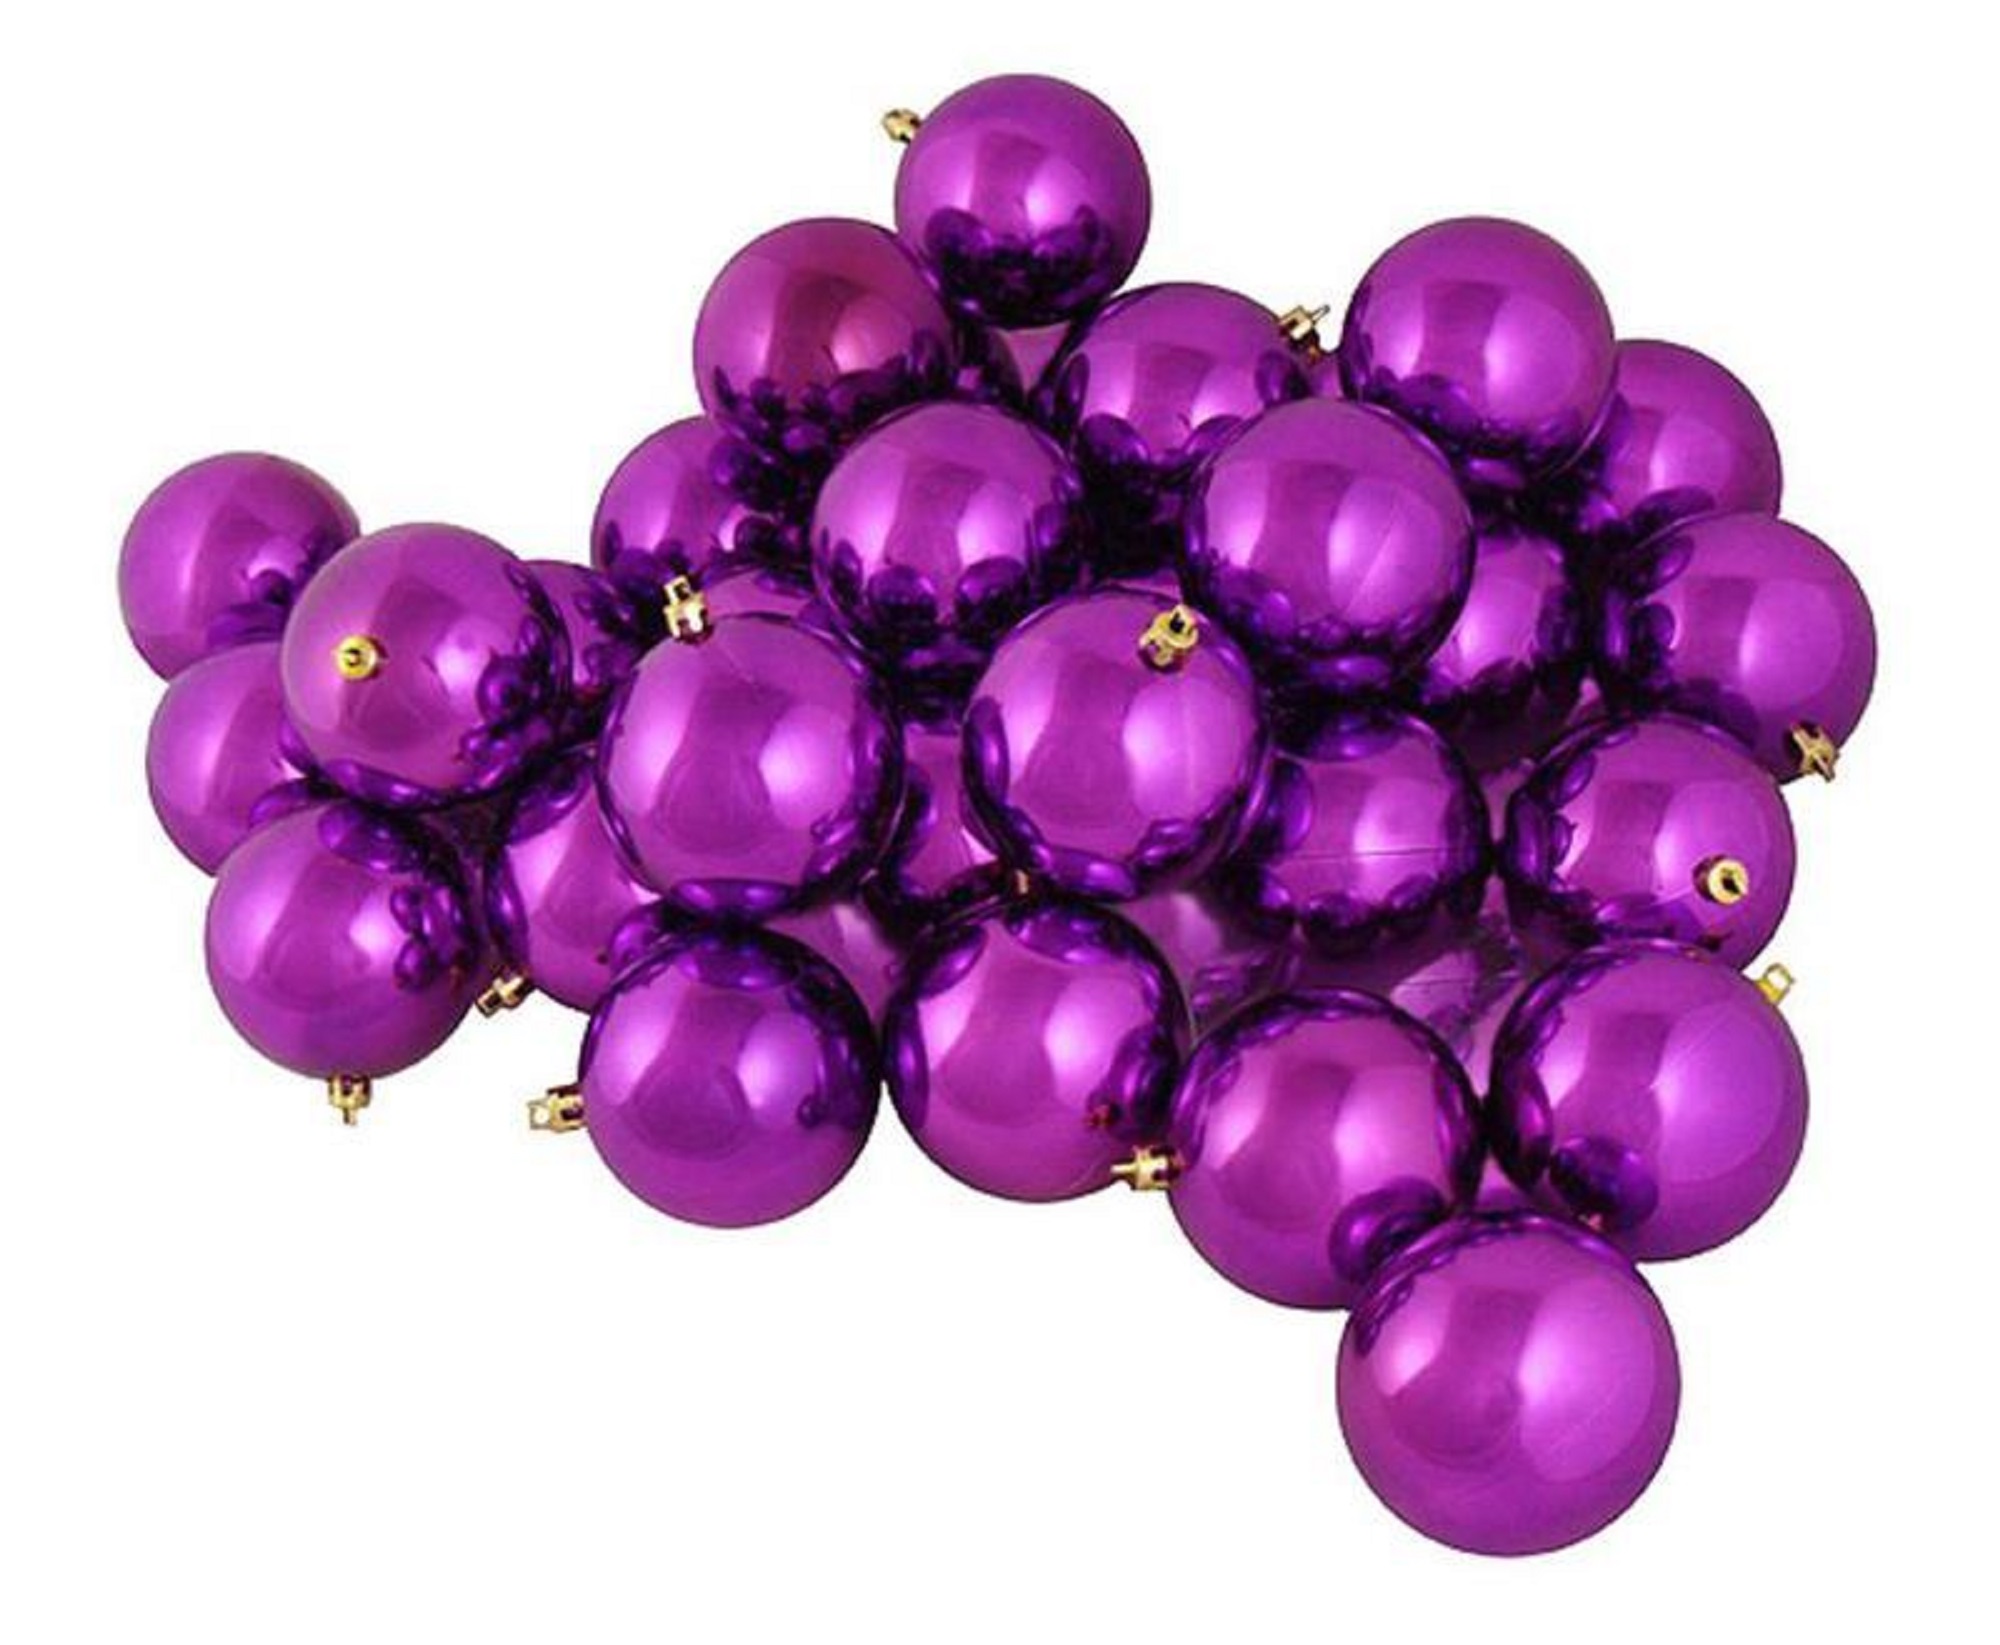 Northlight 60ct Purple Shatterproof Shiny Christmas Ball Ornaments 2.5" (60mm)